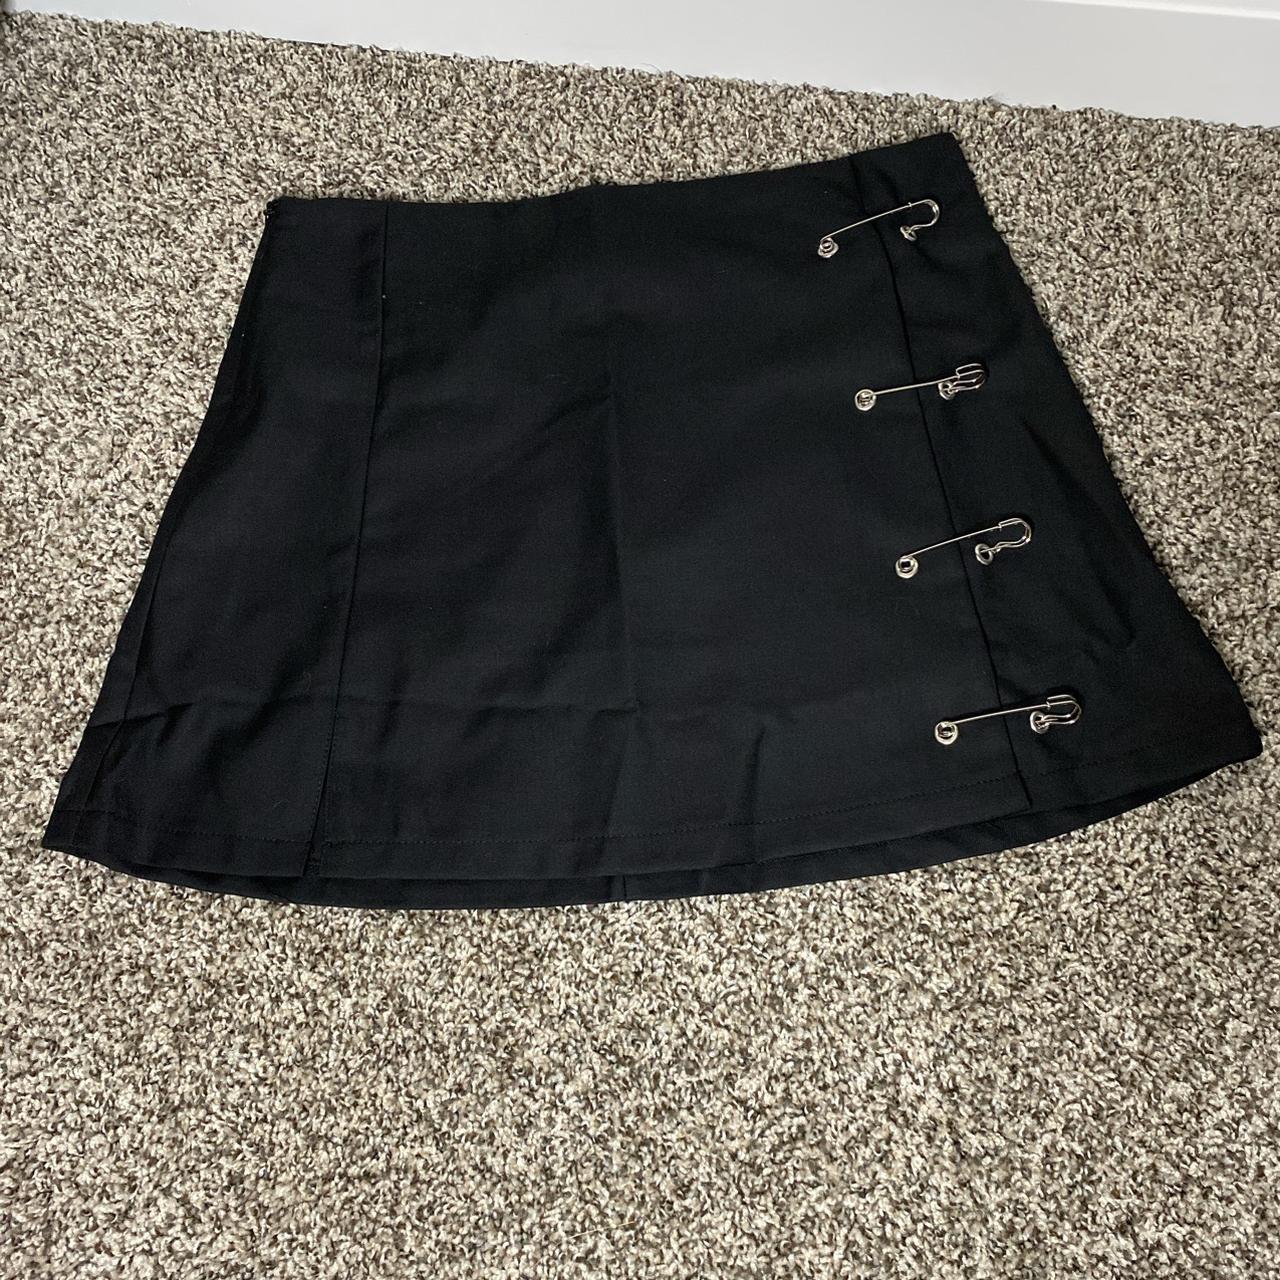 Safety Pin aesthetic 🧷 black skirt! Free... - Depop